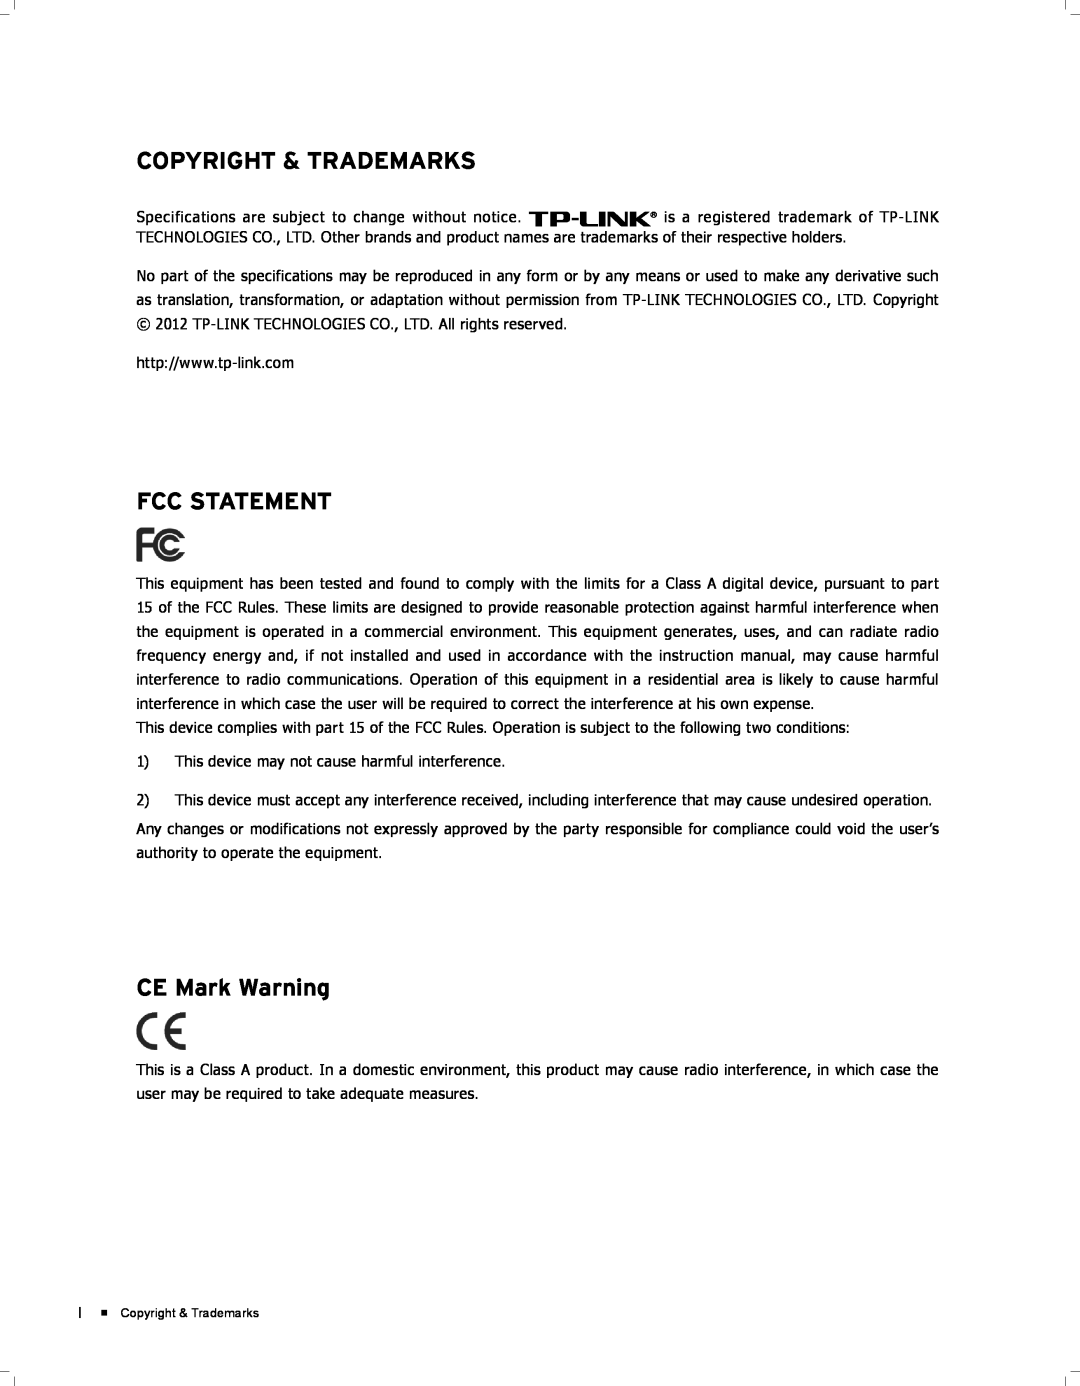 TP-Link TL-SL3428 manual Copyright & Trademarks, Fcc Statement, CE Mark Warning 